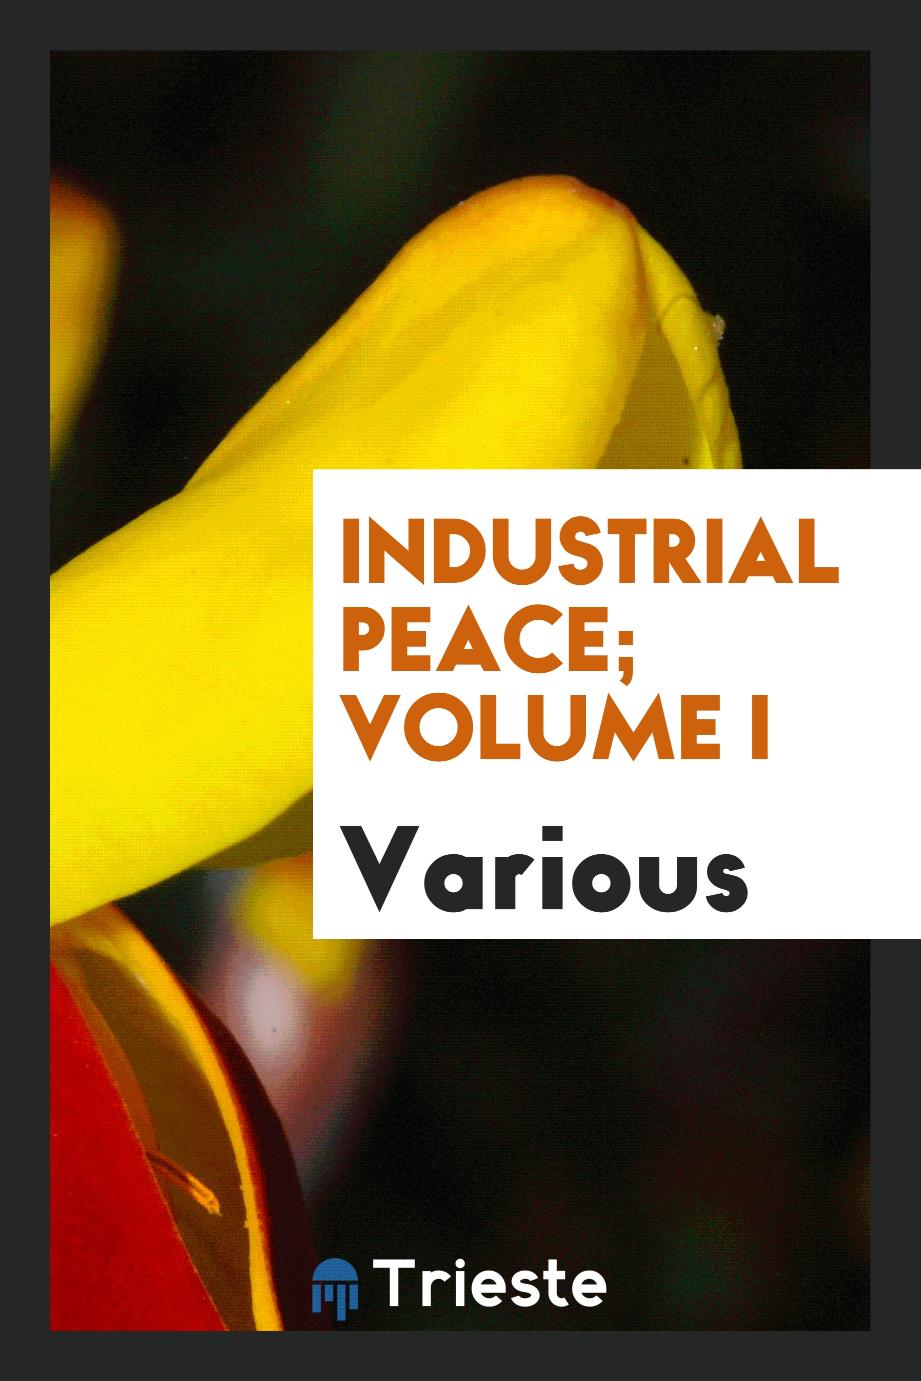 Industrial peace; Volume I